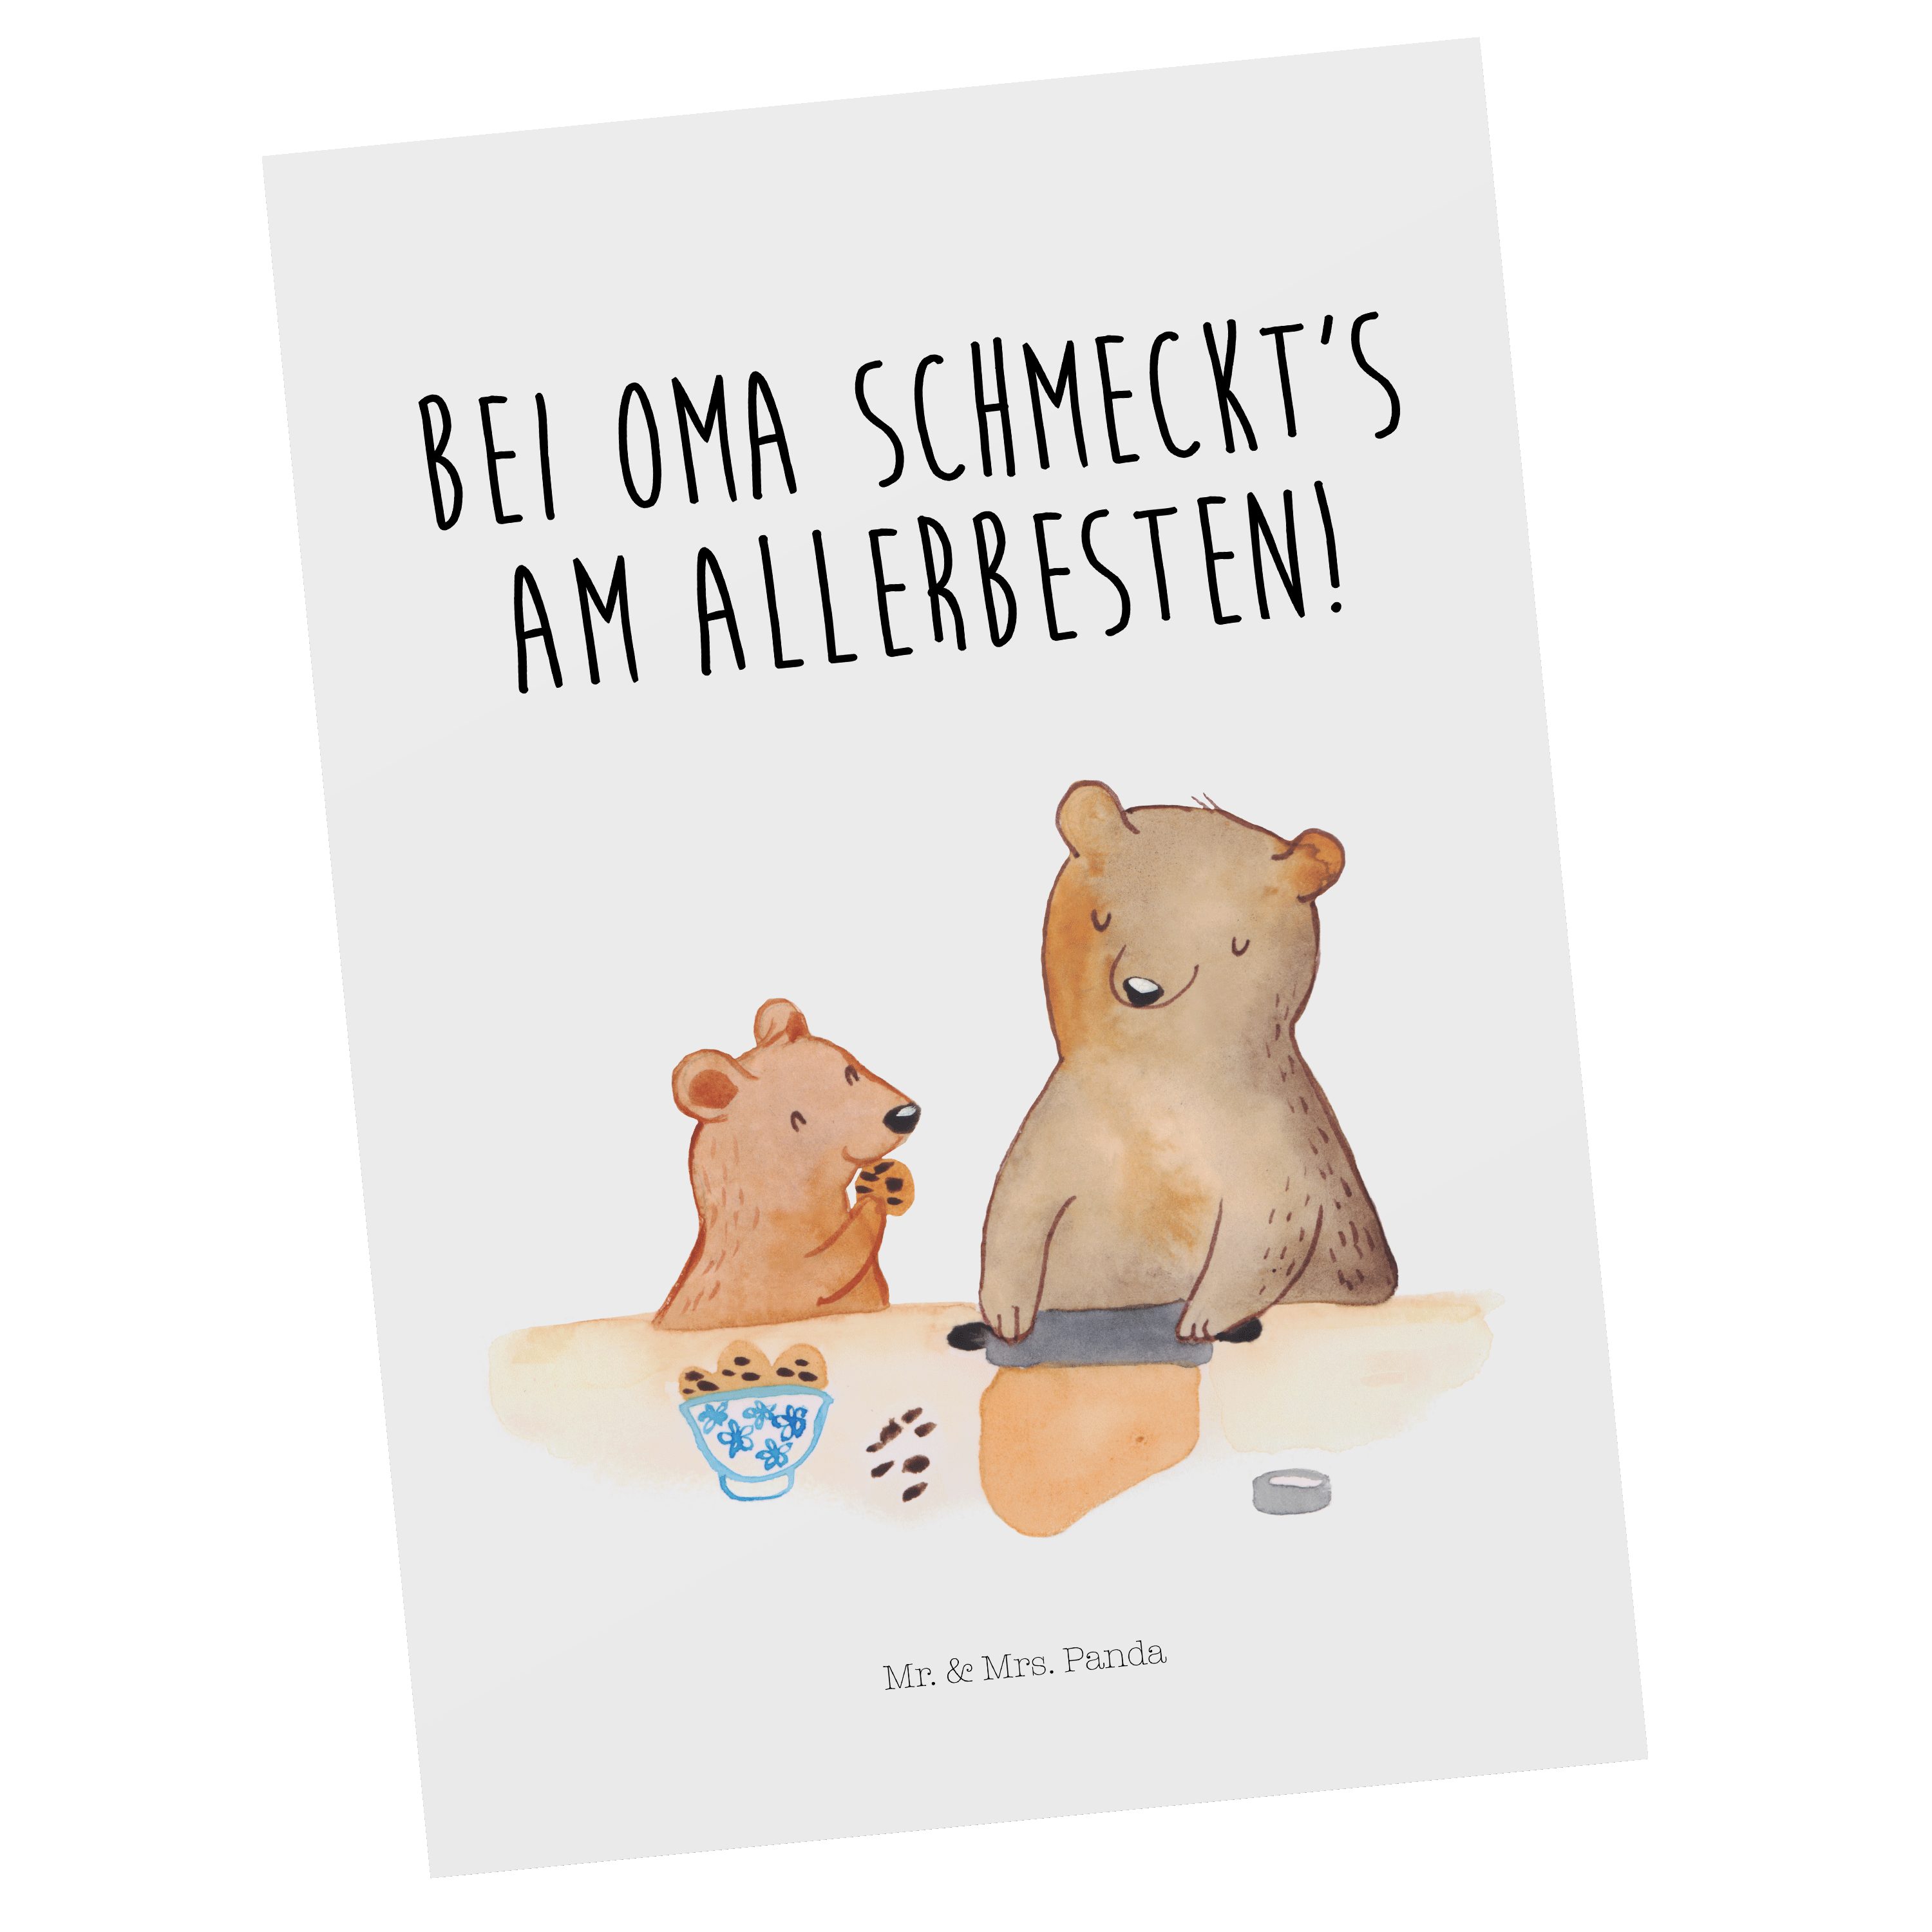 Mr. & Mrs. Panda Postkarte Oma Bär backen - Weiß - Geschenk, Karte, Schwester, Bären, Geschenkka